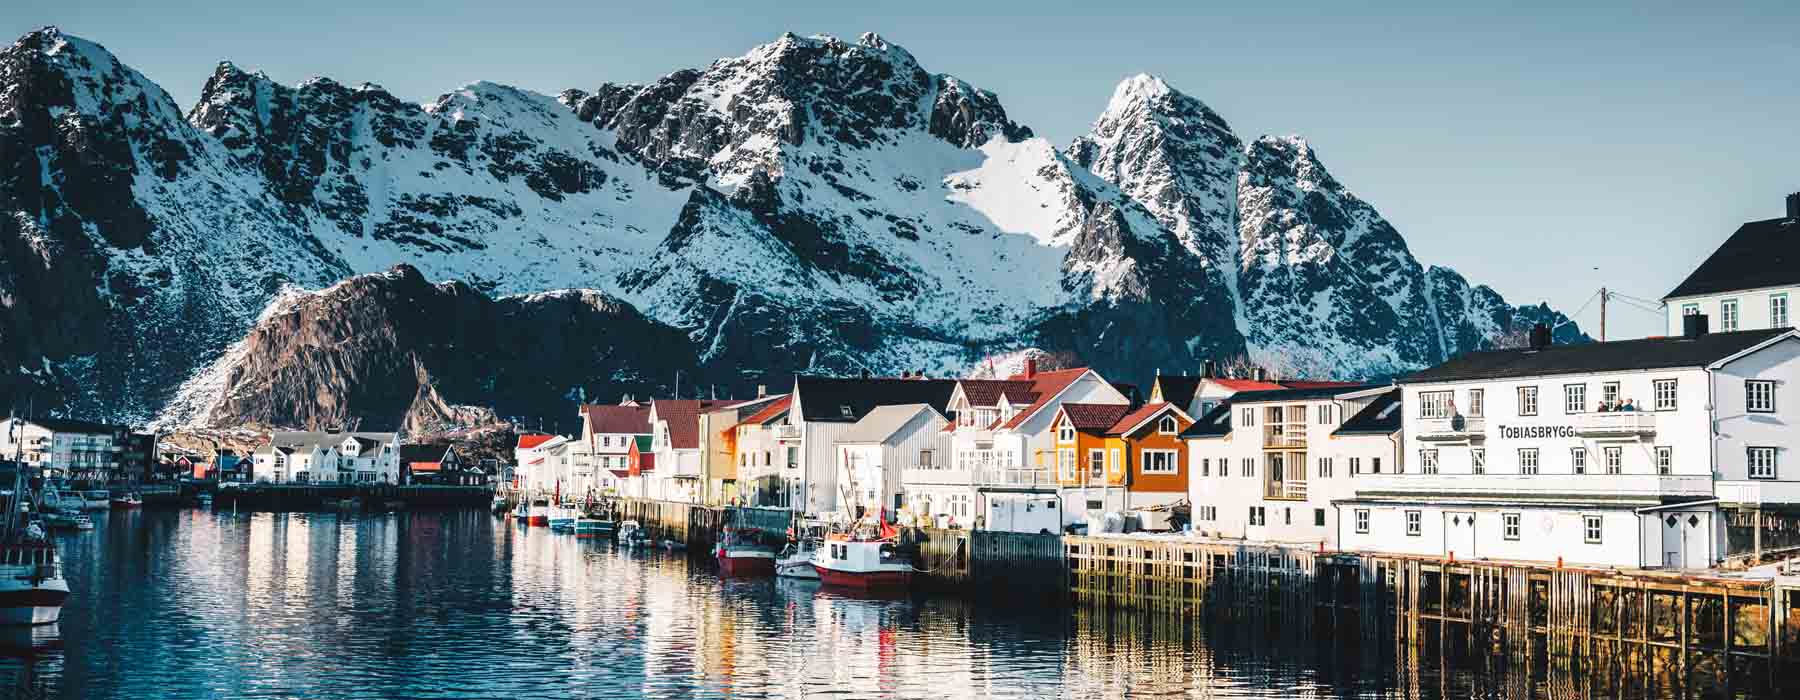 All our Norway<br class="hidden-md hidden-lg" /> Wildlife Holidays